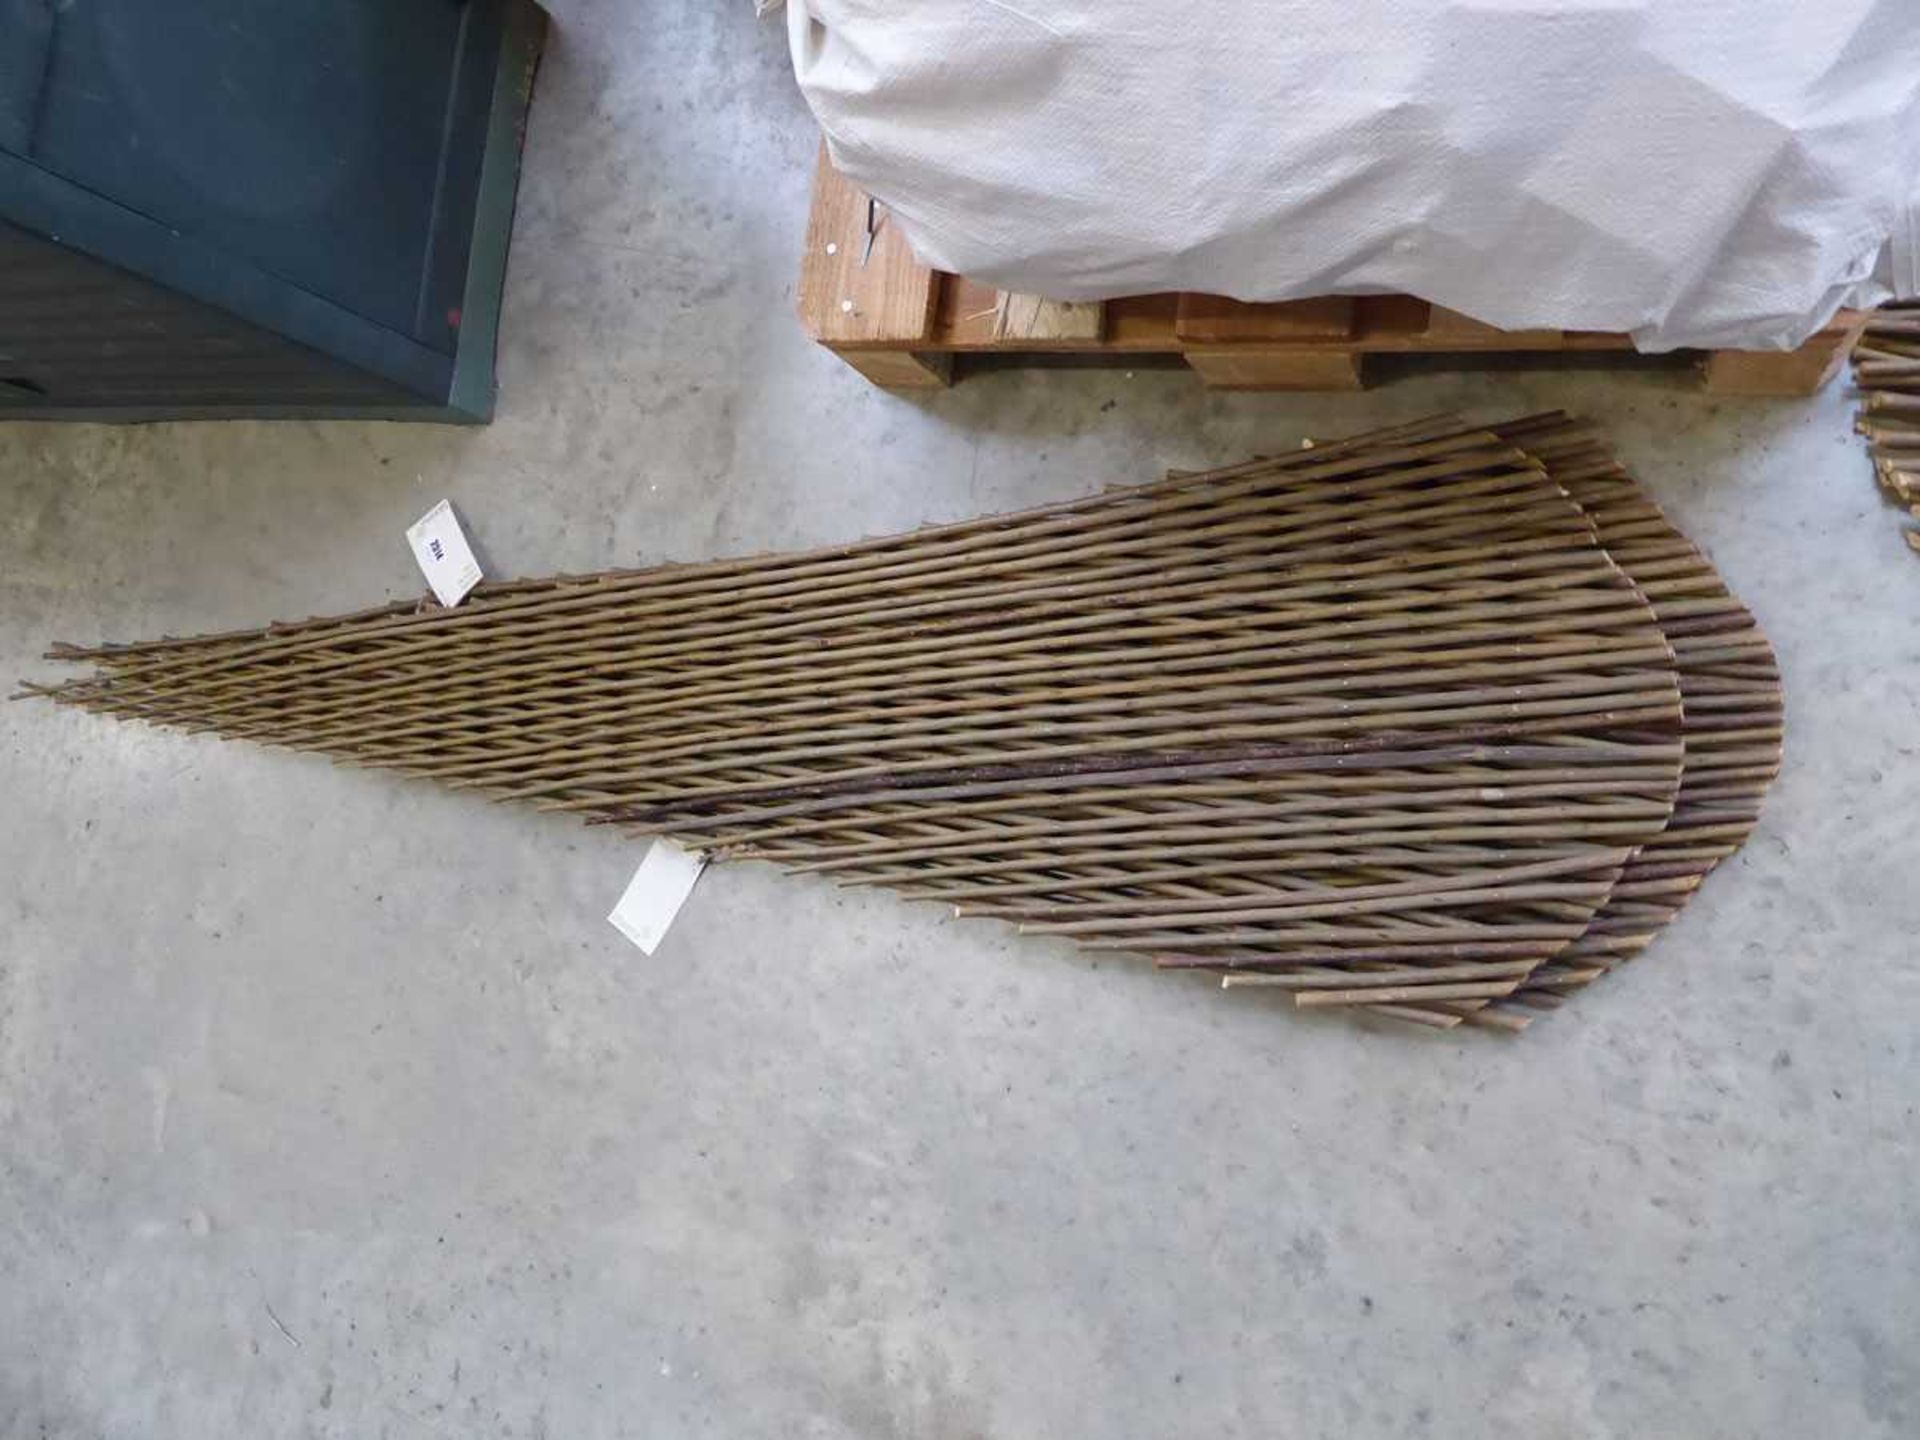 2 180 x 90cm expanding fan willow trellis panels